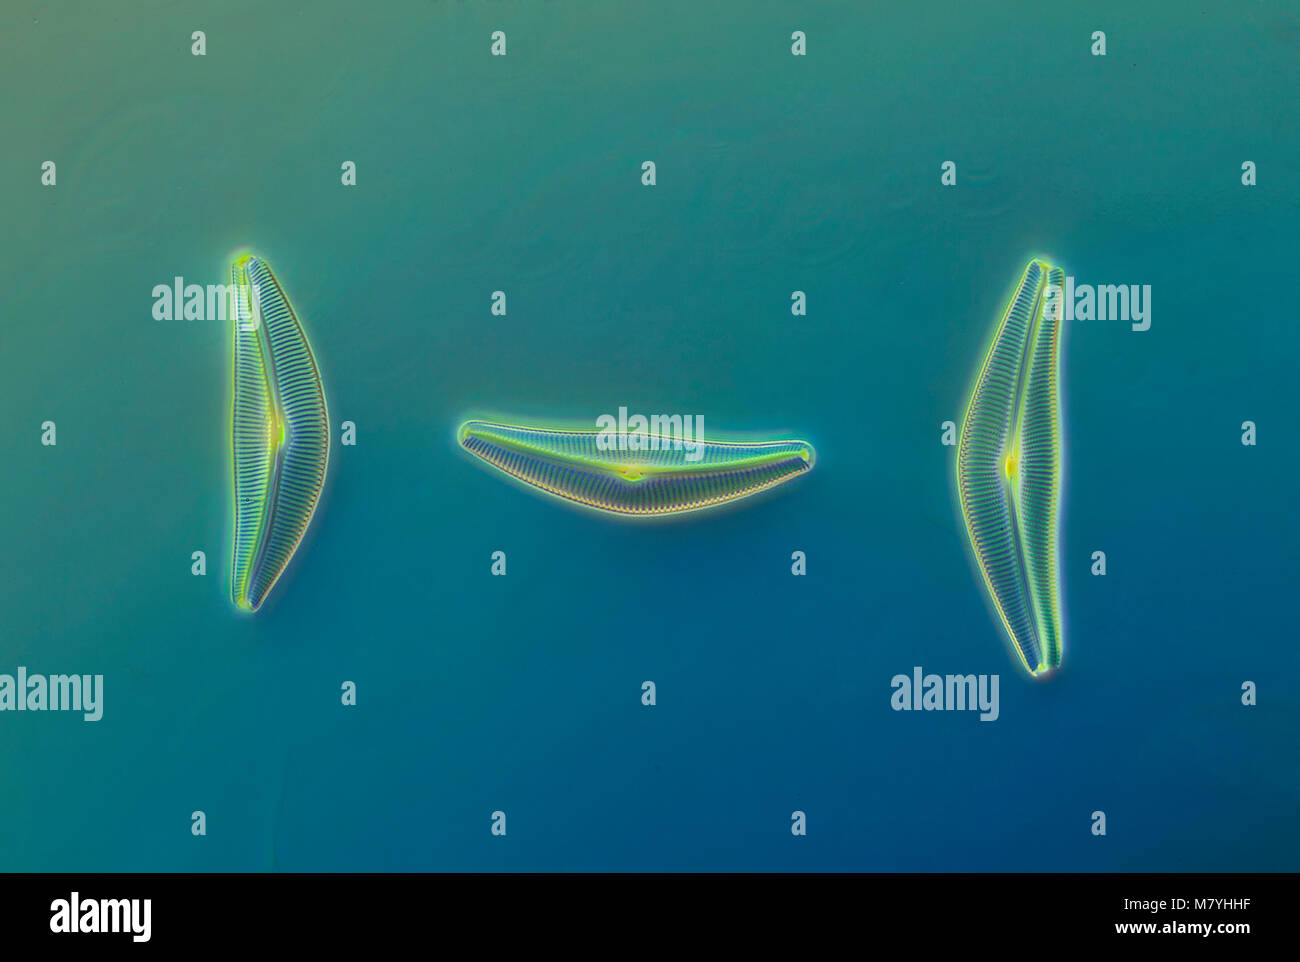 Plankton diatoms fotografías e imágenes de alta resolución - Alamy